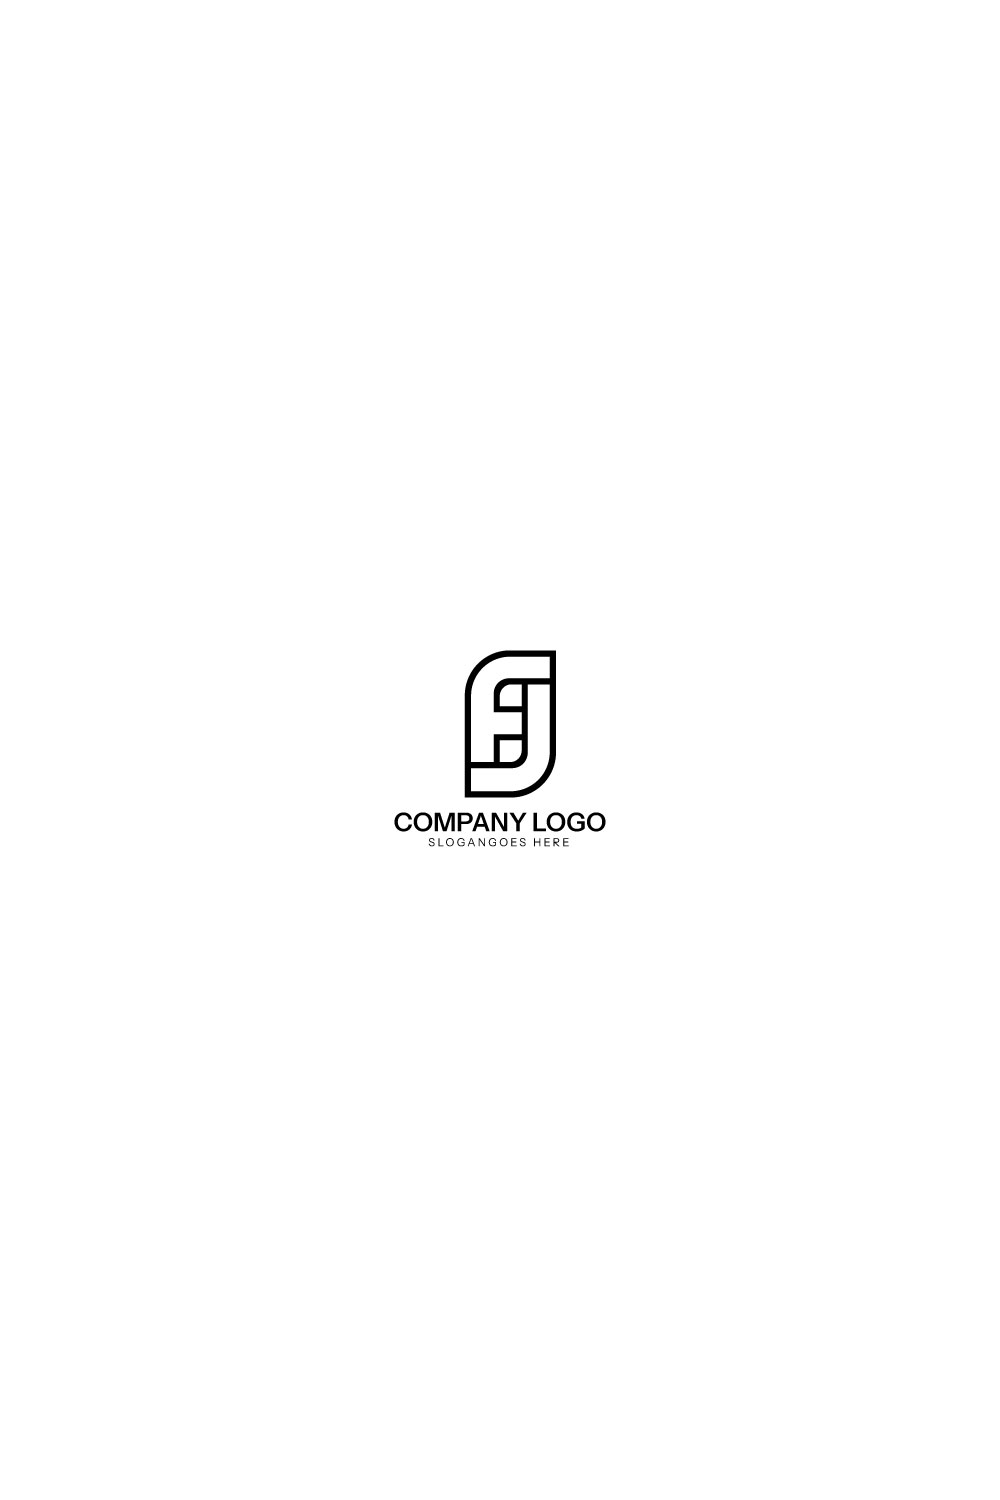 Professional Letter F J Logo Design pinterest preview image.